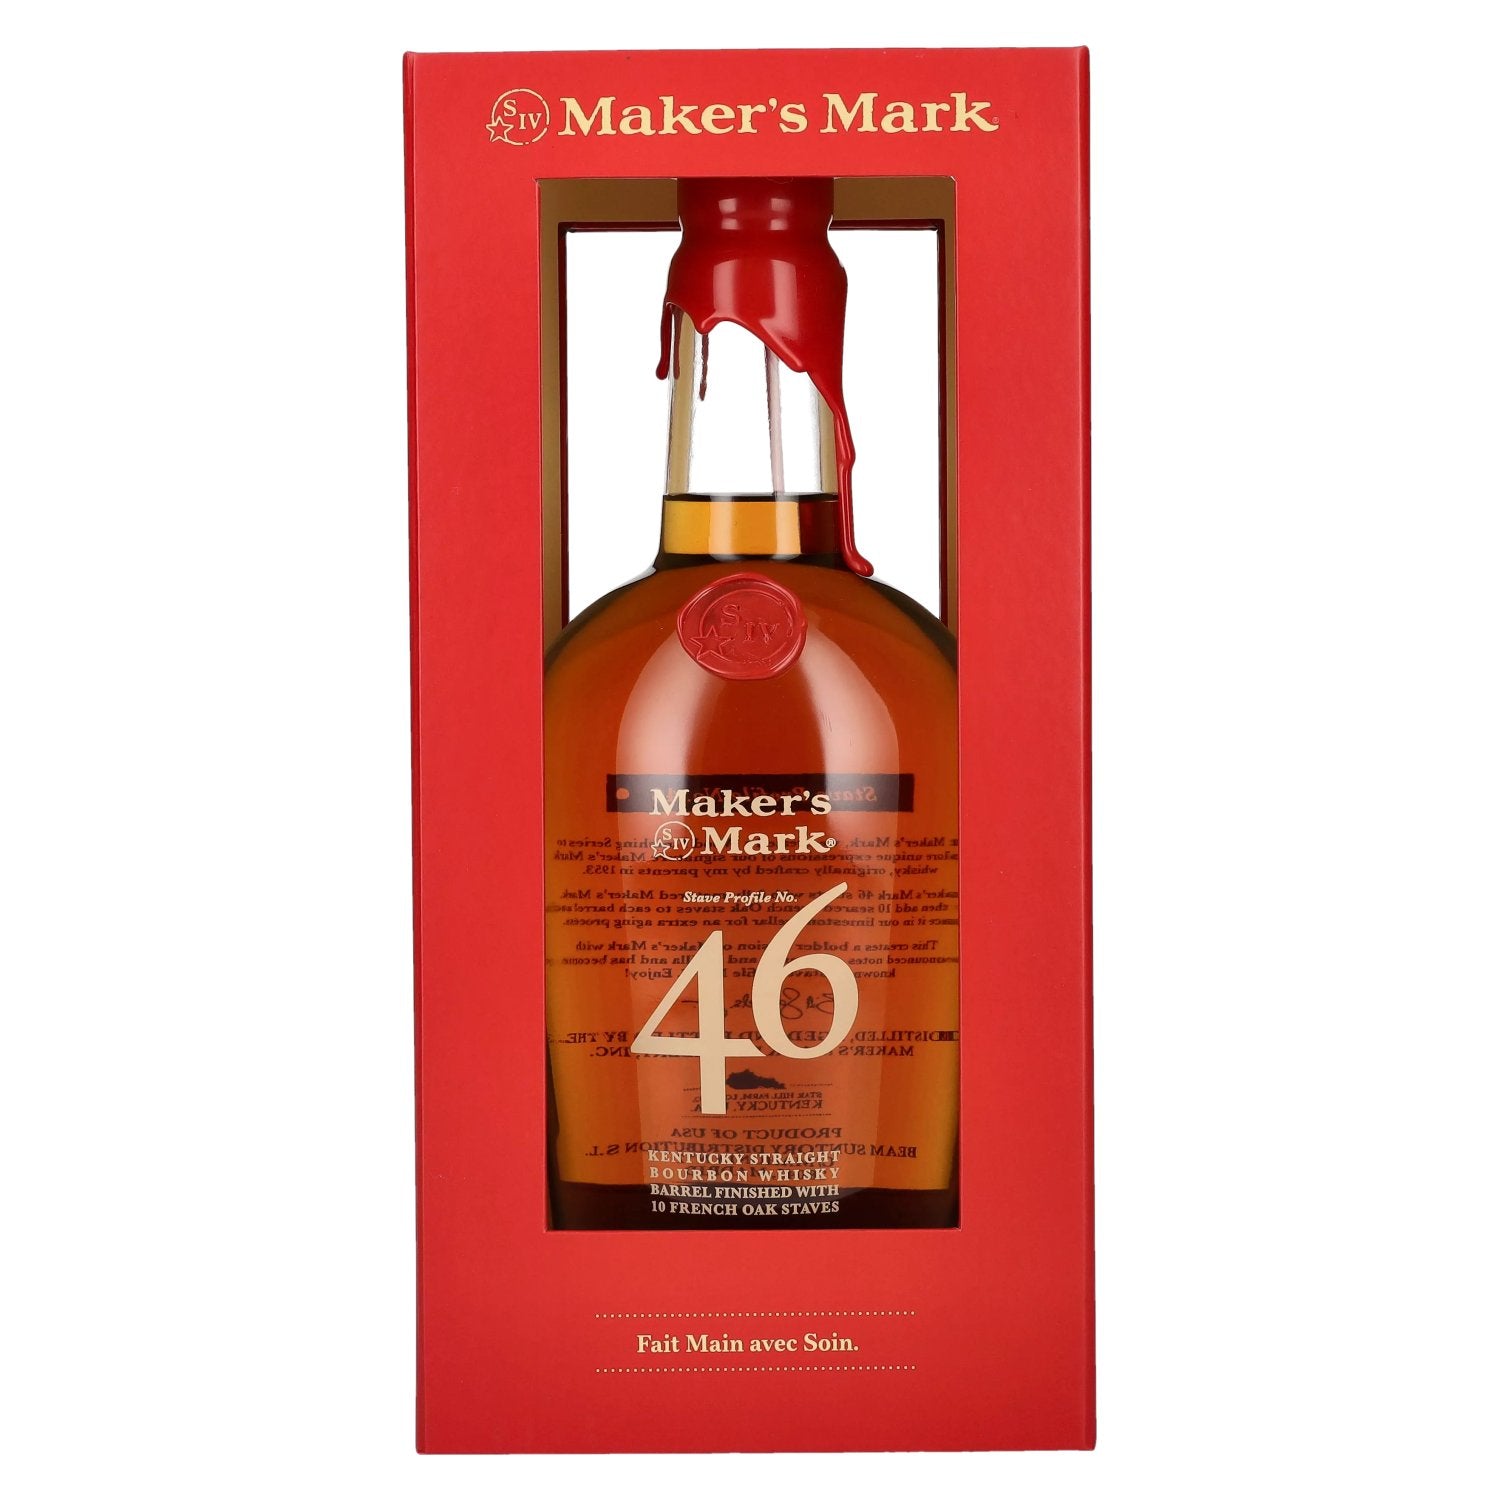 Maker's Mark 46 Kentucky Bourbon Whisky 47% Vol. 0,7l in Giftbox